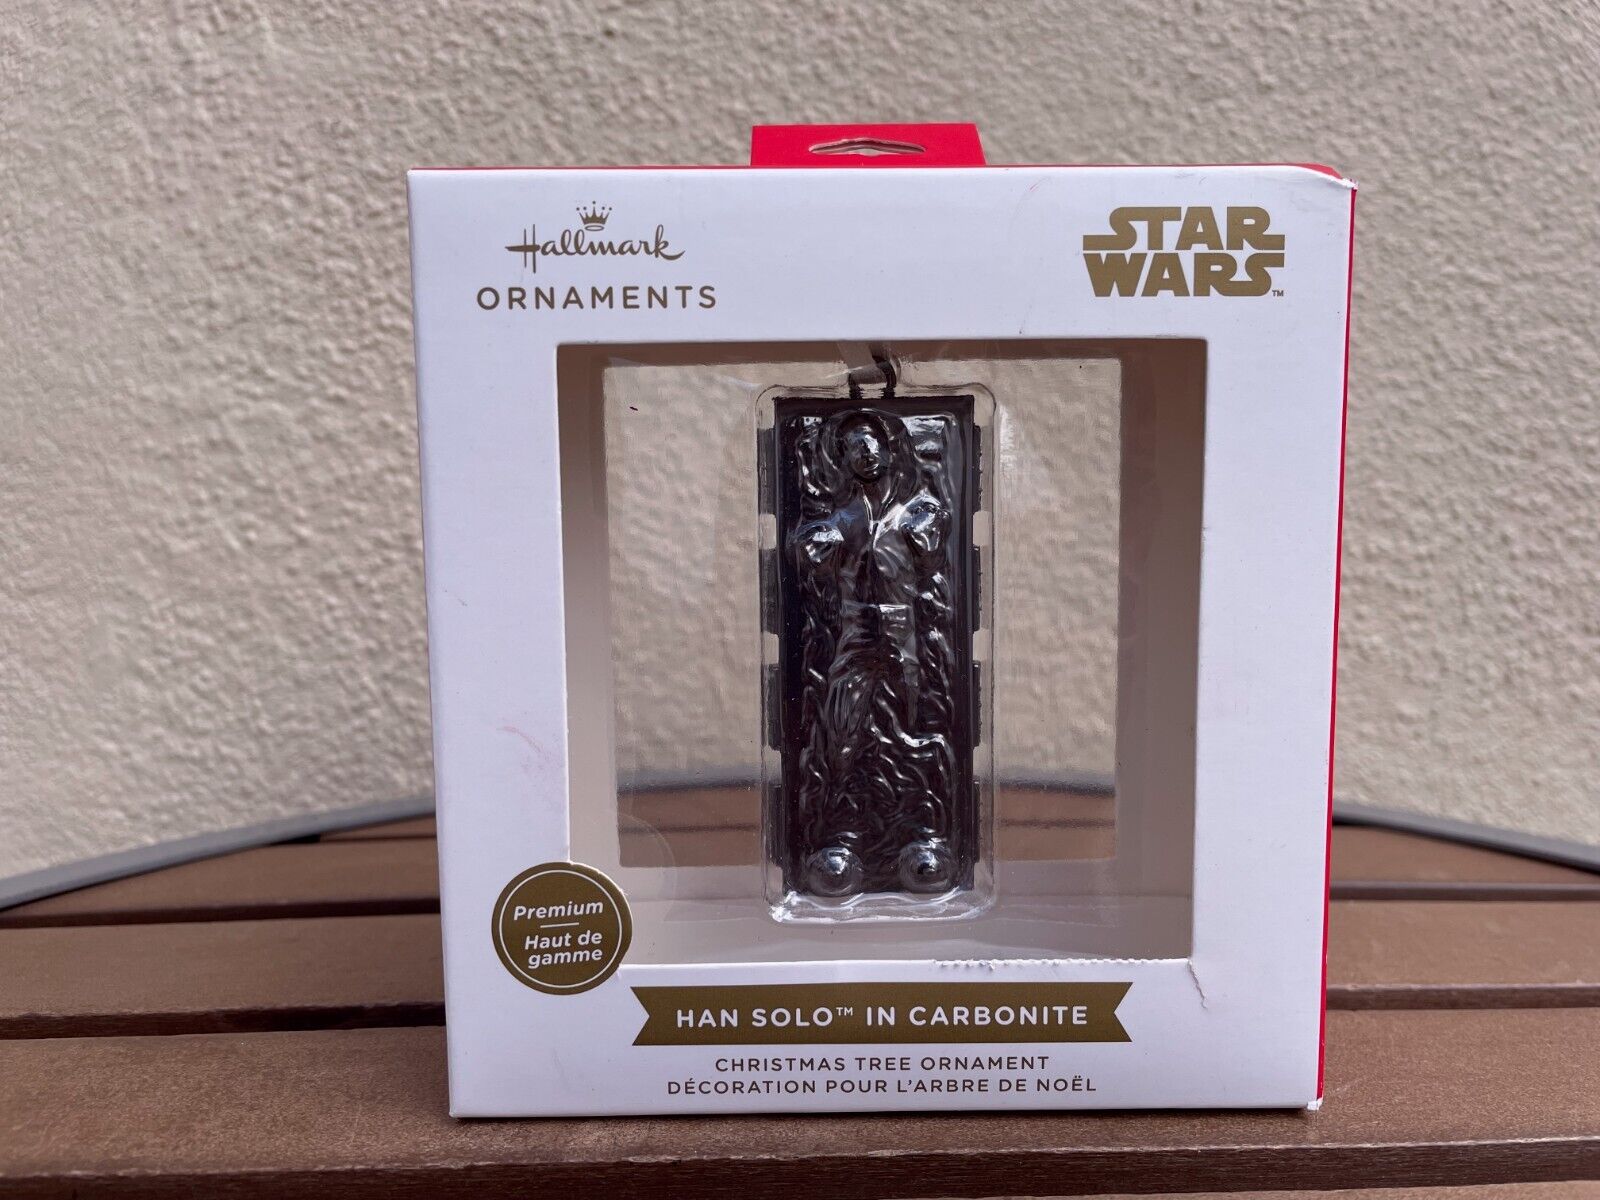 NEW Hallmark Ornaments Star Wars Han Solo in Carbonite Premium Walmart Exclusive